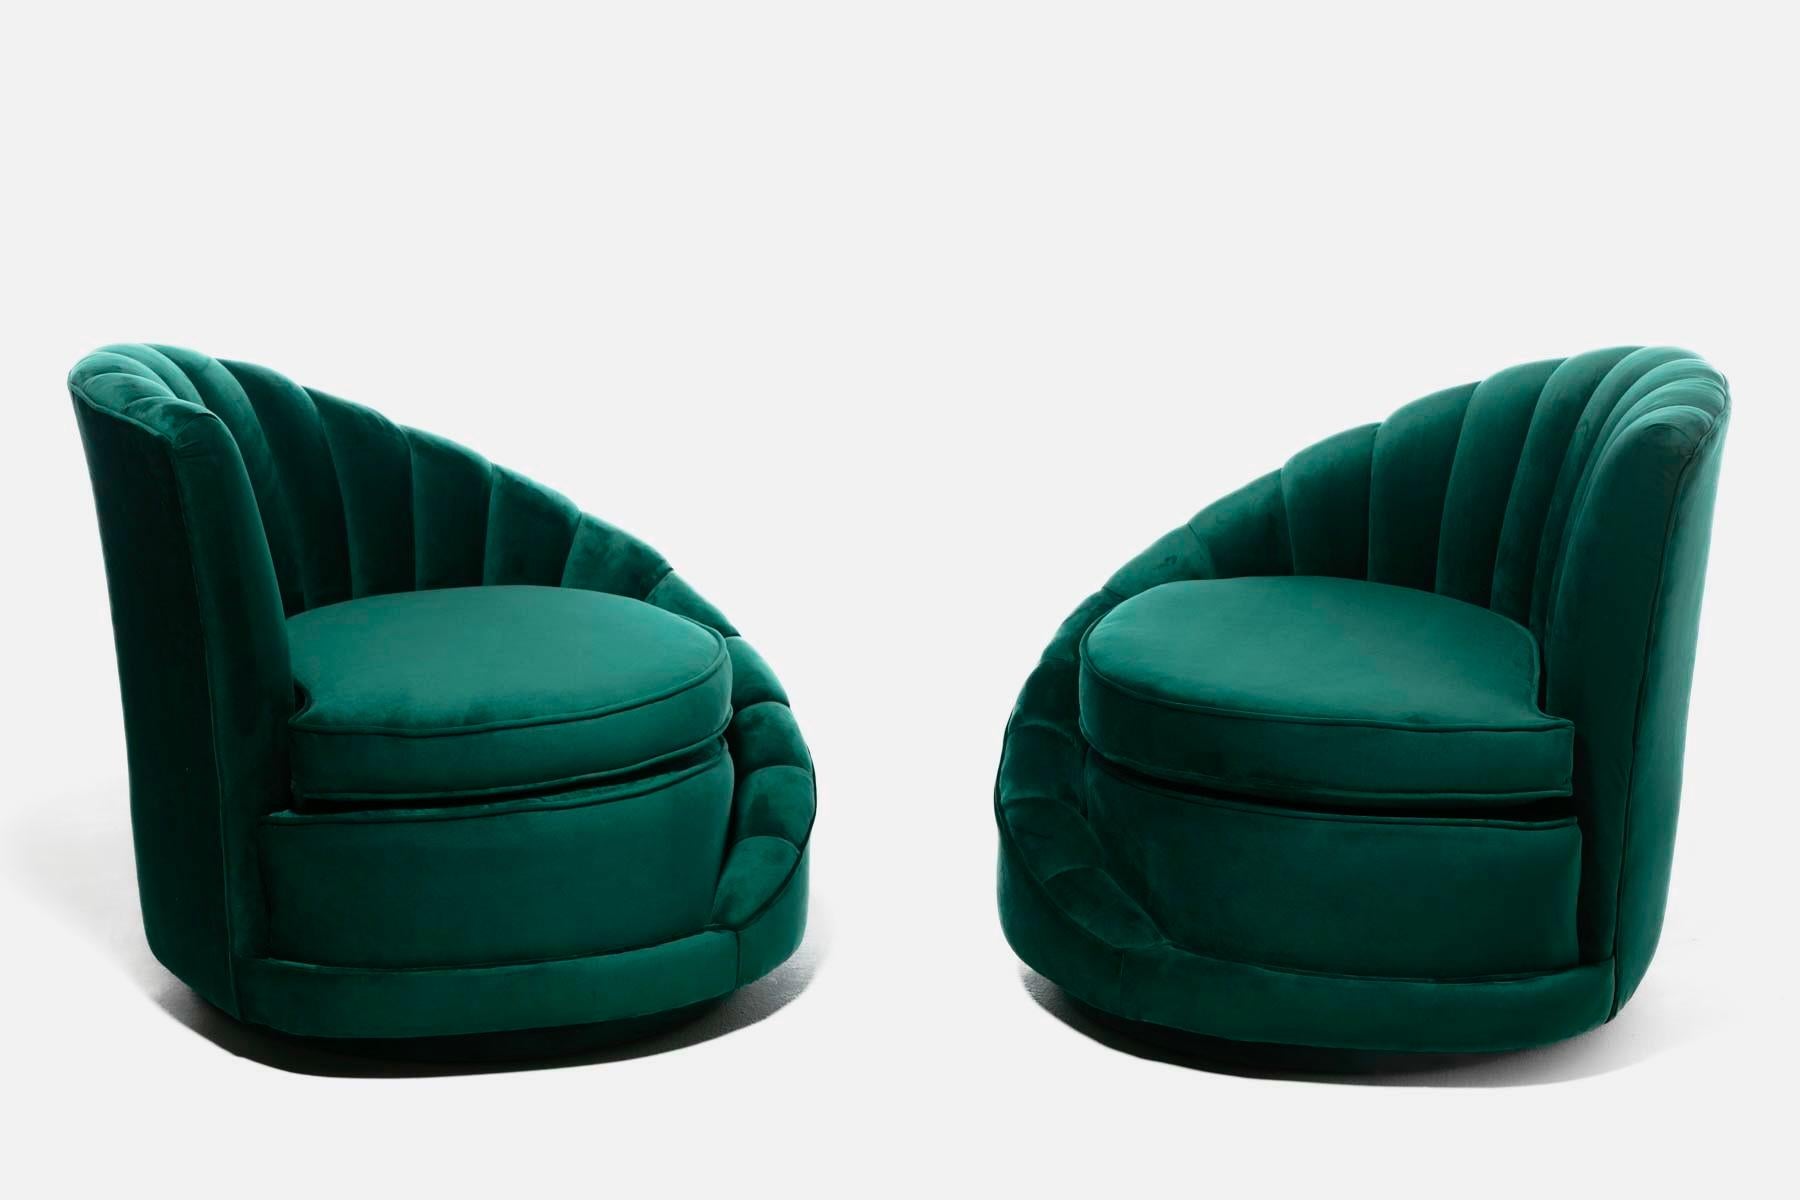 Mid-20th Century Hollywood Regency Glamorous Asymmetrical Swivel Chairs in Emerald Green Velvet For Sale